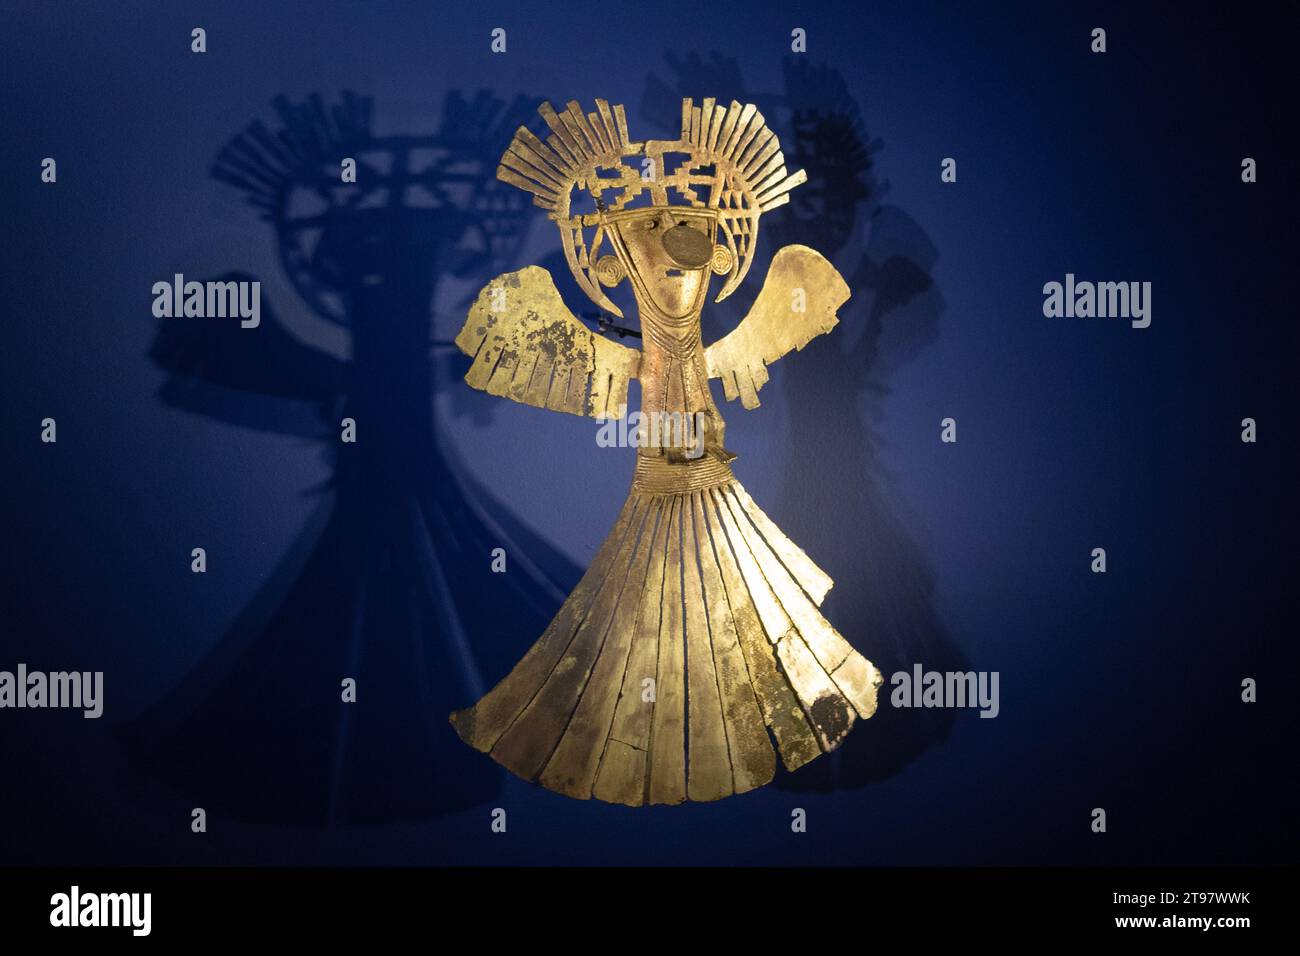 Indigenous bird chaman golden pectoral piece at golden museum Stock Photo